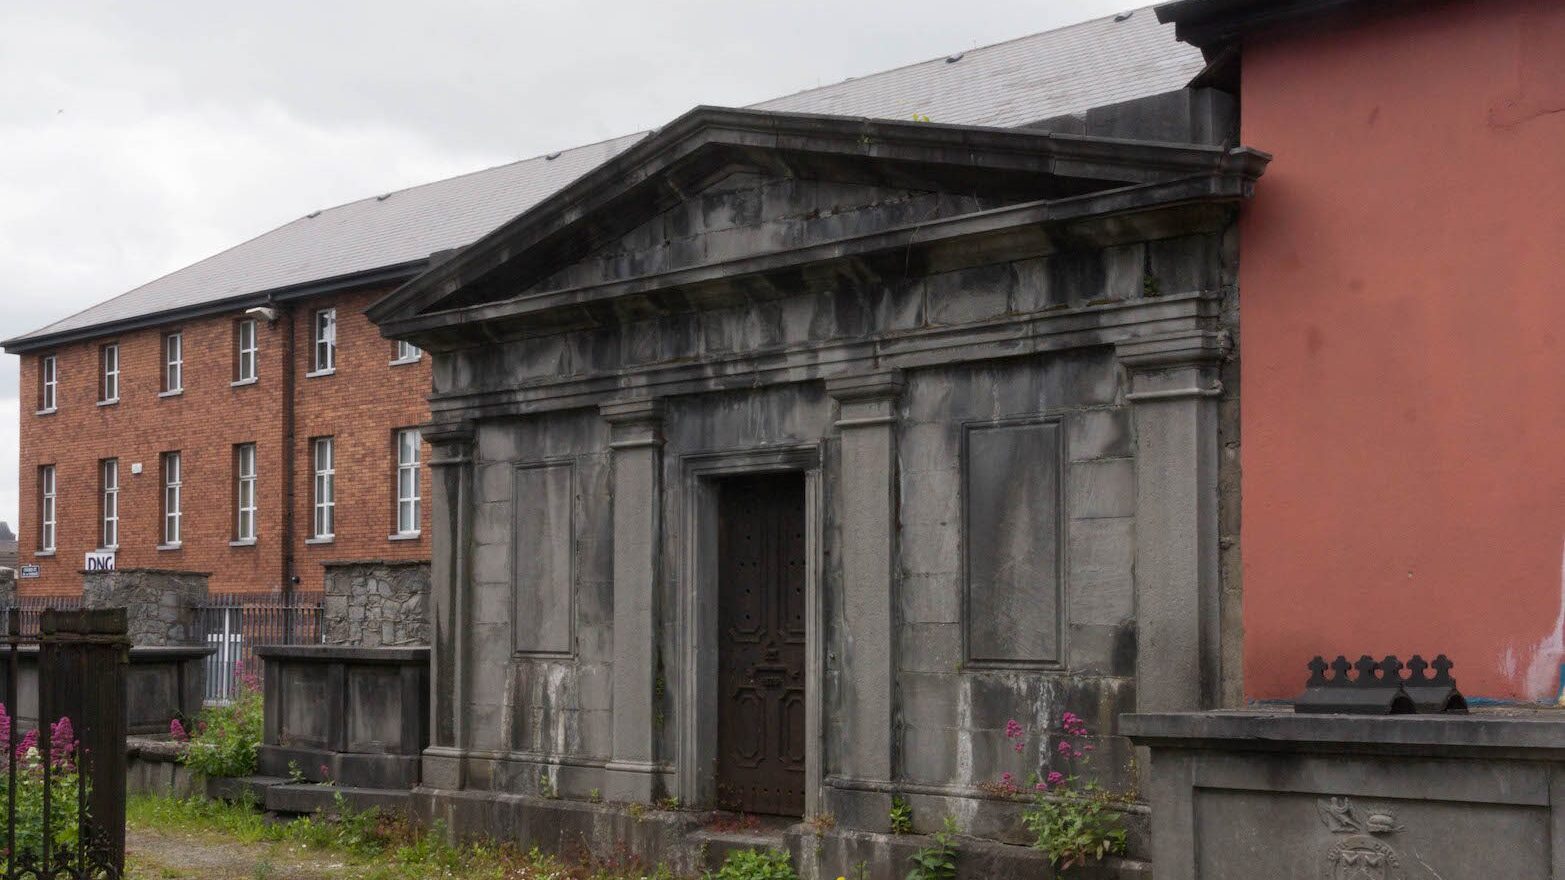 St. JOHN’S CHURCH AND GRAVEYARD IN LIMERICK [CHURCH OF IRELAND] REF-105917-1